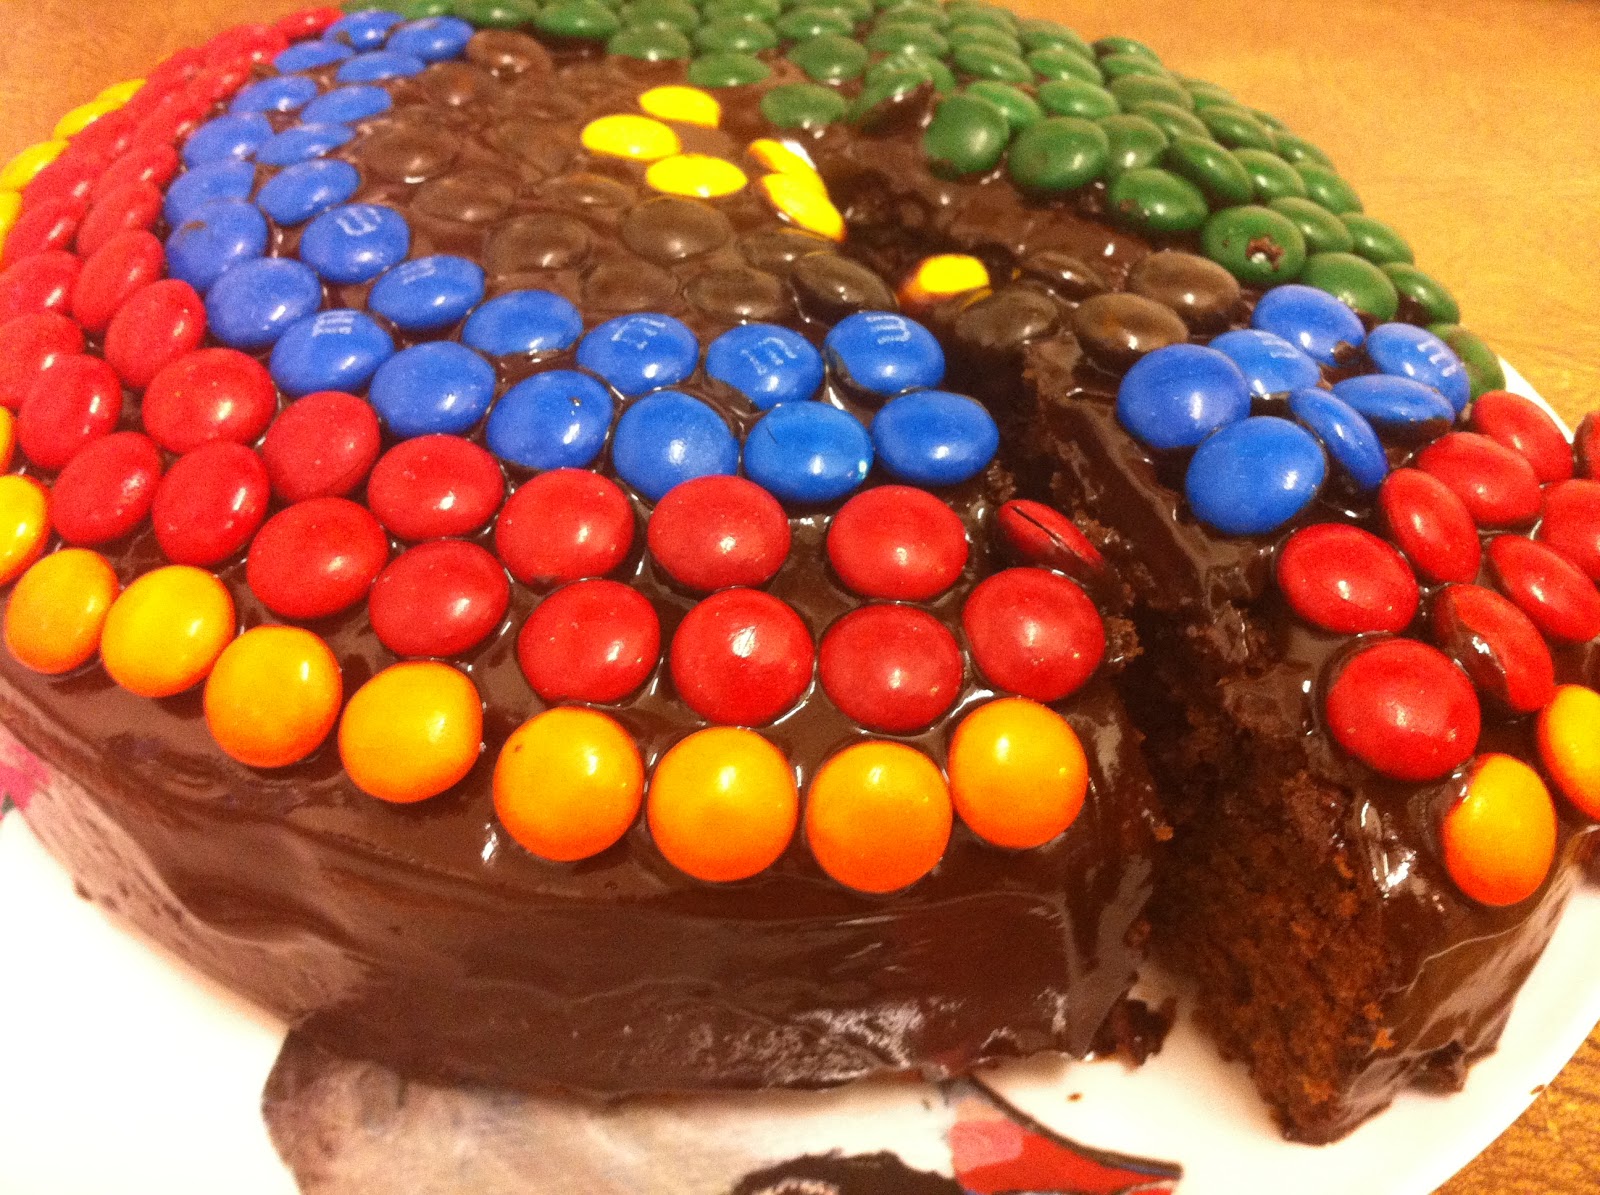 http://weekend-mummy.blogspot.com.au/2012/10/rainbow-cake-makes-everything-better.html